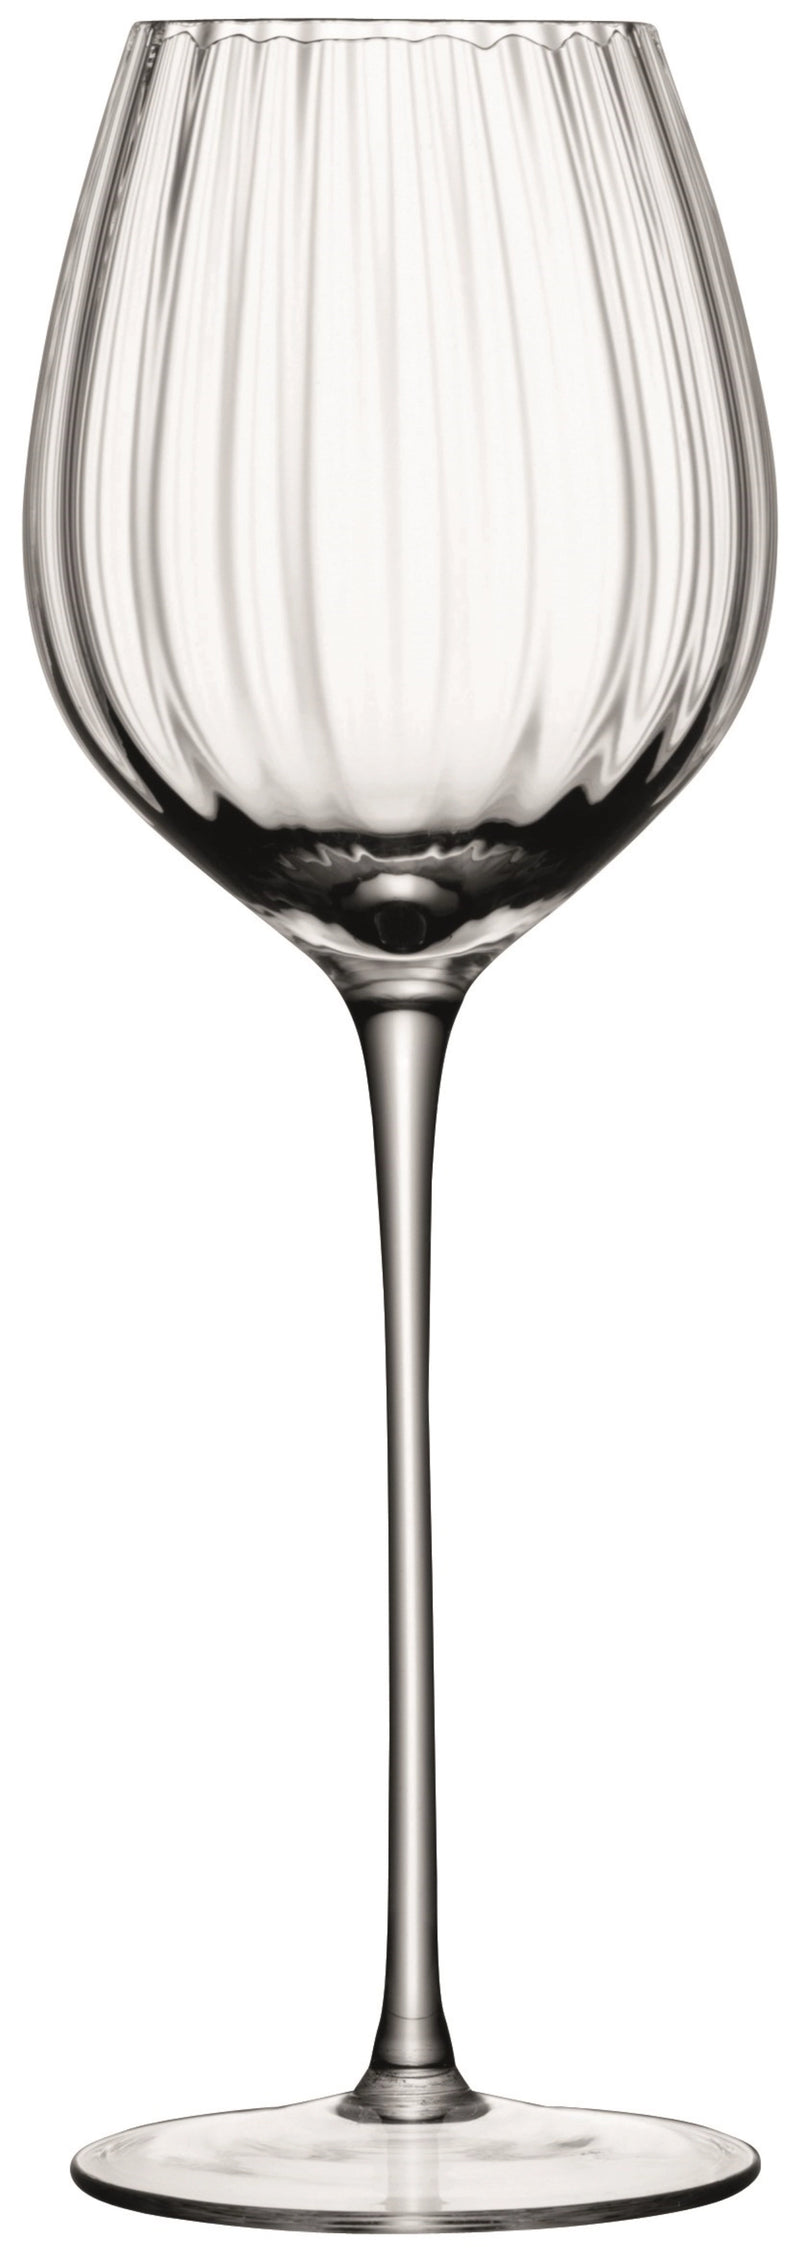 LSA white wine glass 2 Set Aurelia 430ml clear optics LSAAU24